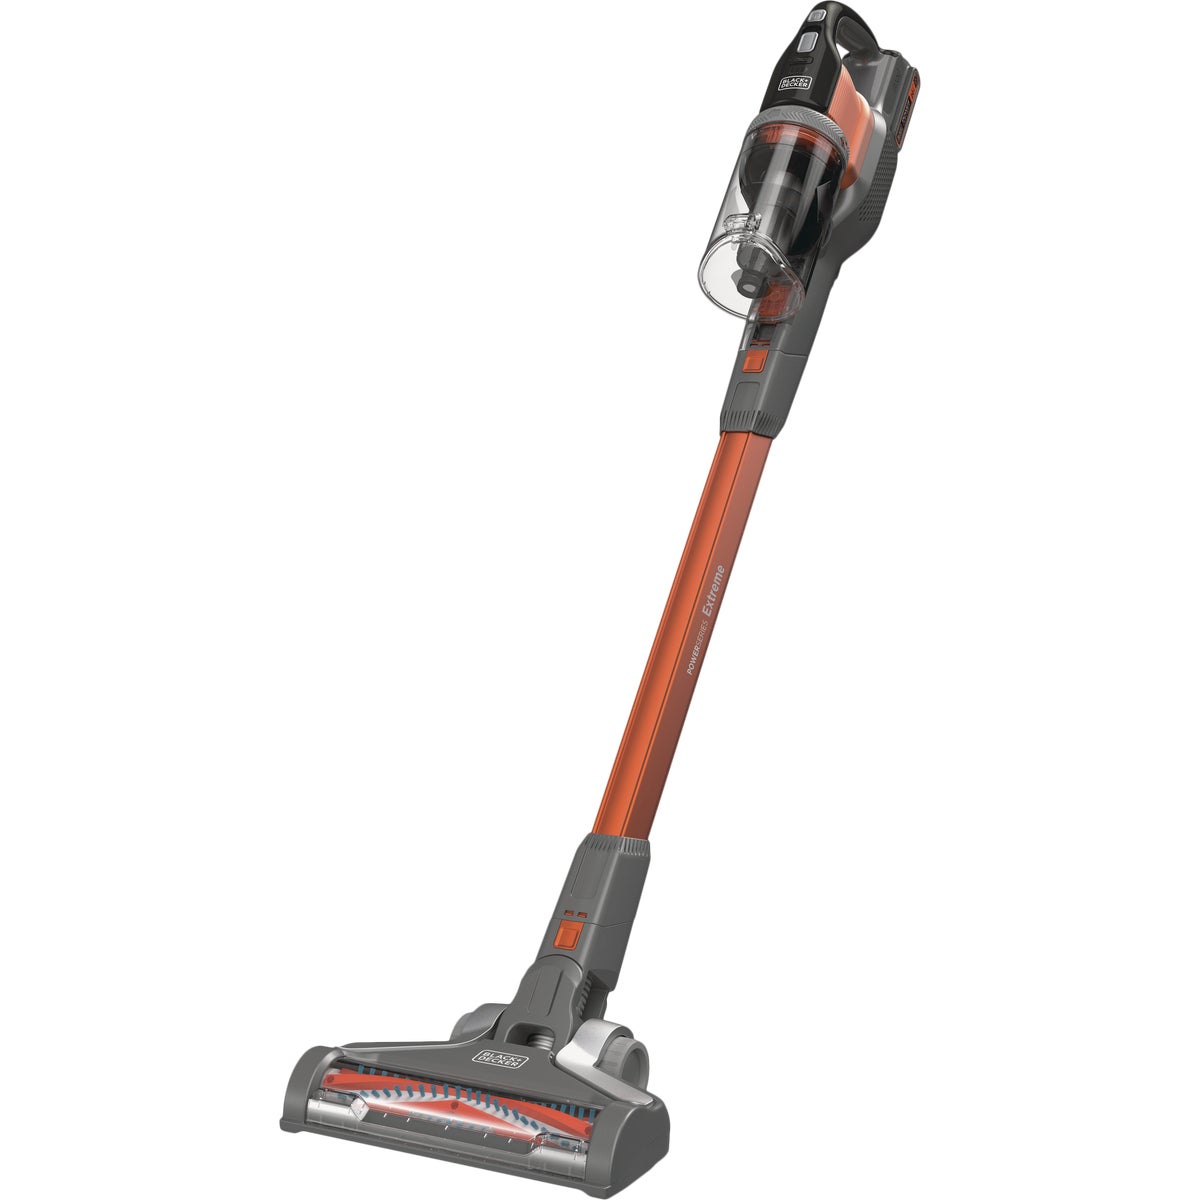 Black & Decker 20v PowerSeries Extreme Cordless Stick Vacuum